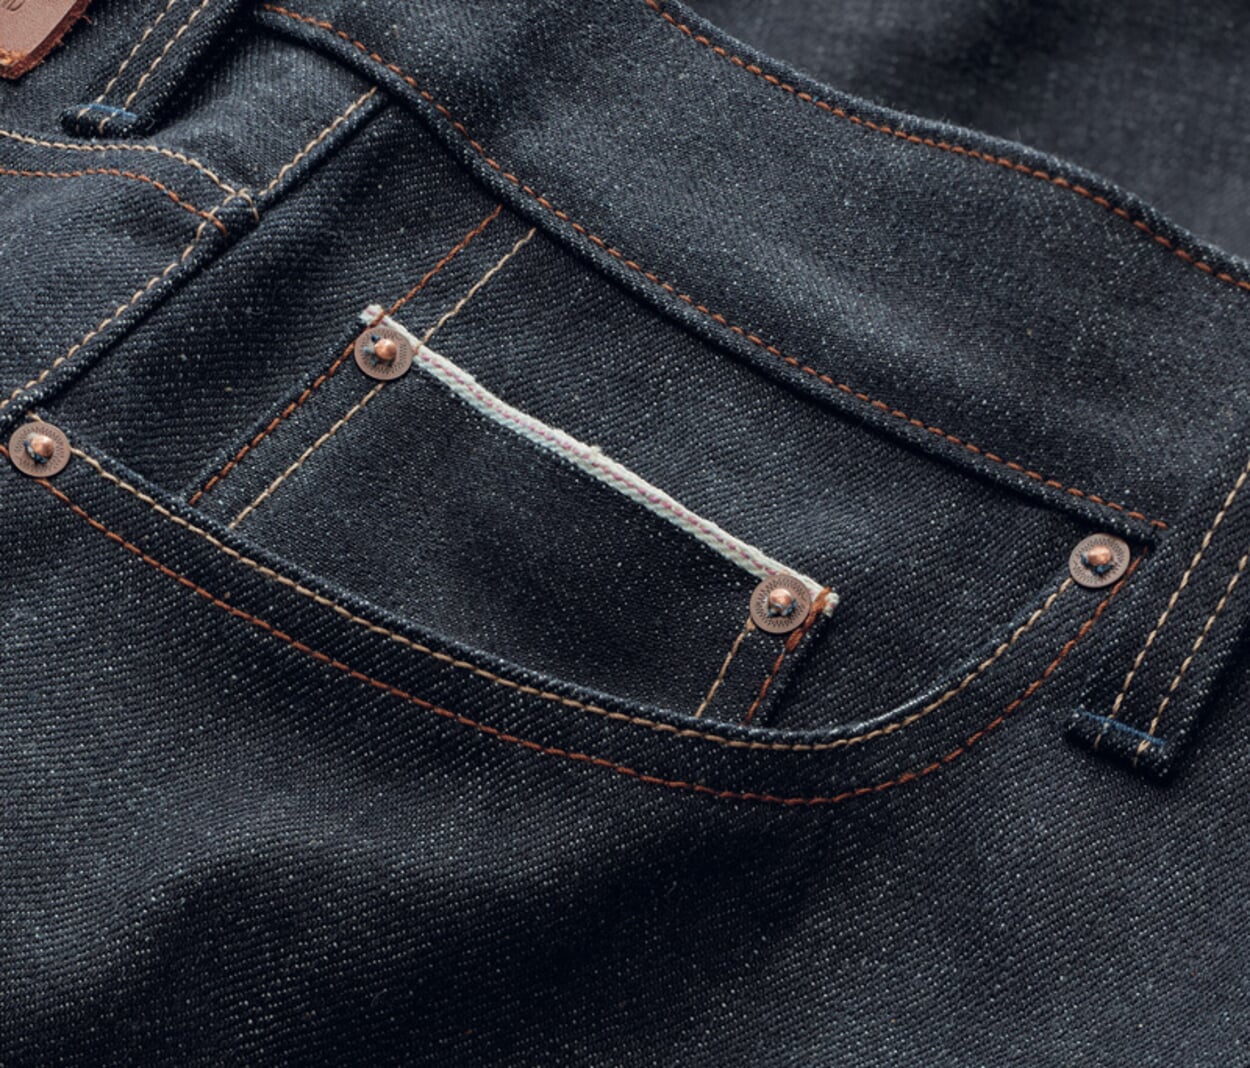 Manufactum jeans - Der absolute TOP-Favorit unseres Teams